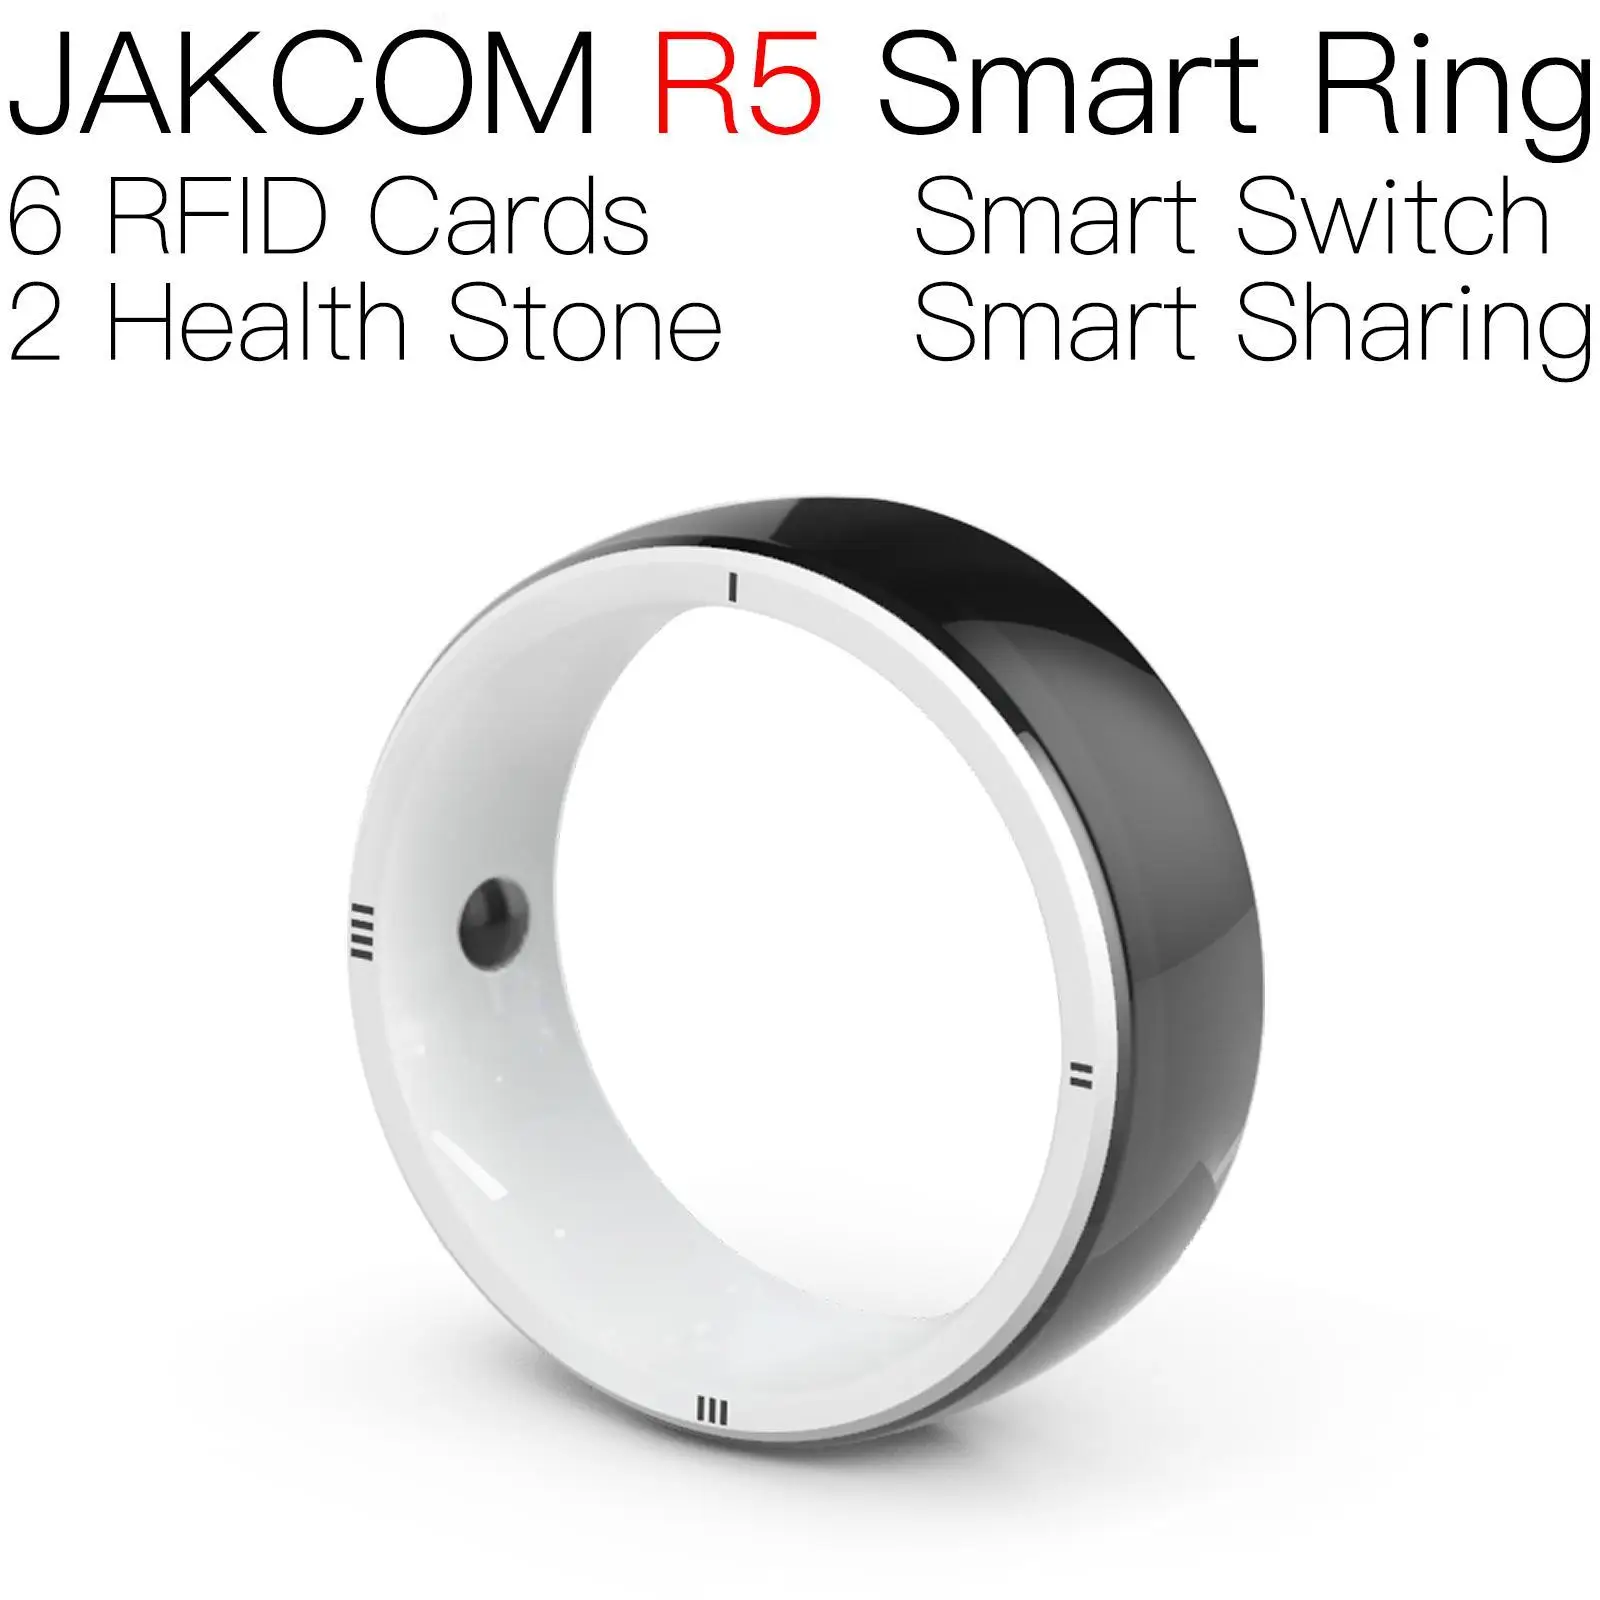 

JAKCOM R5 Smart Ring better than amibo bouloche cdc card read rfid 125khz donkey kong crypto nfc tag monza carte rare